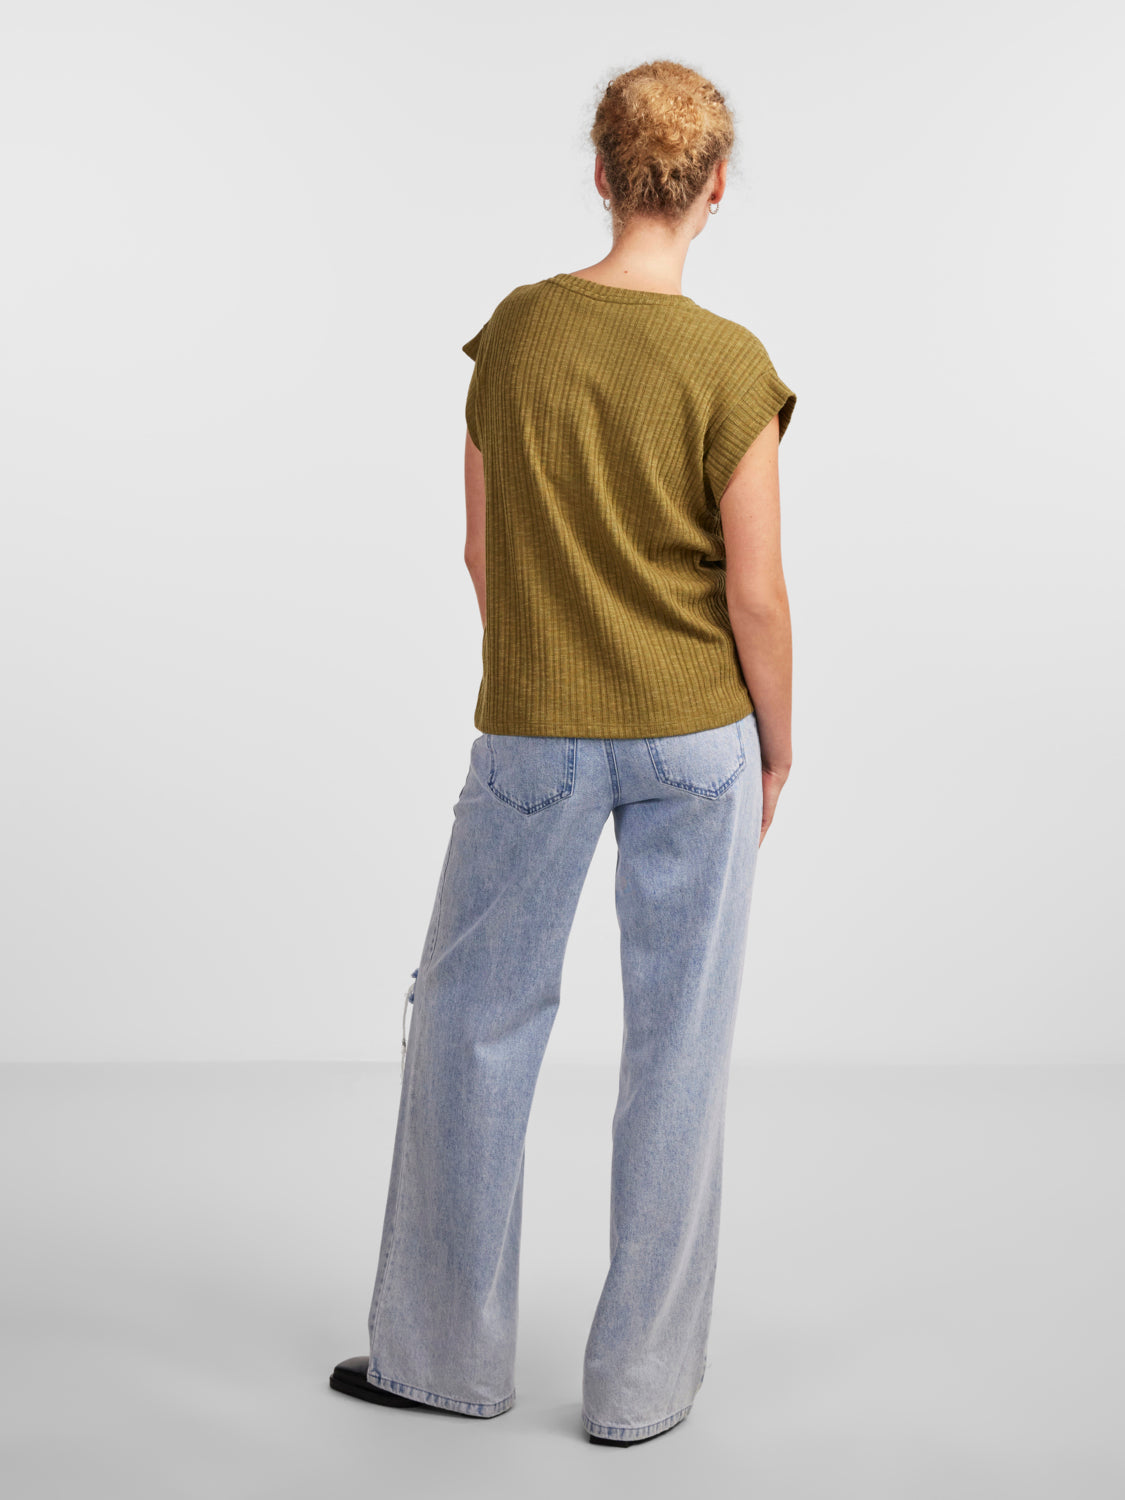 PCLENA T-Shirt - Olive Drab